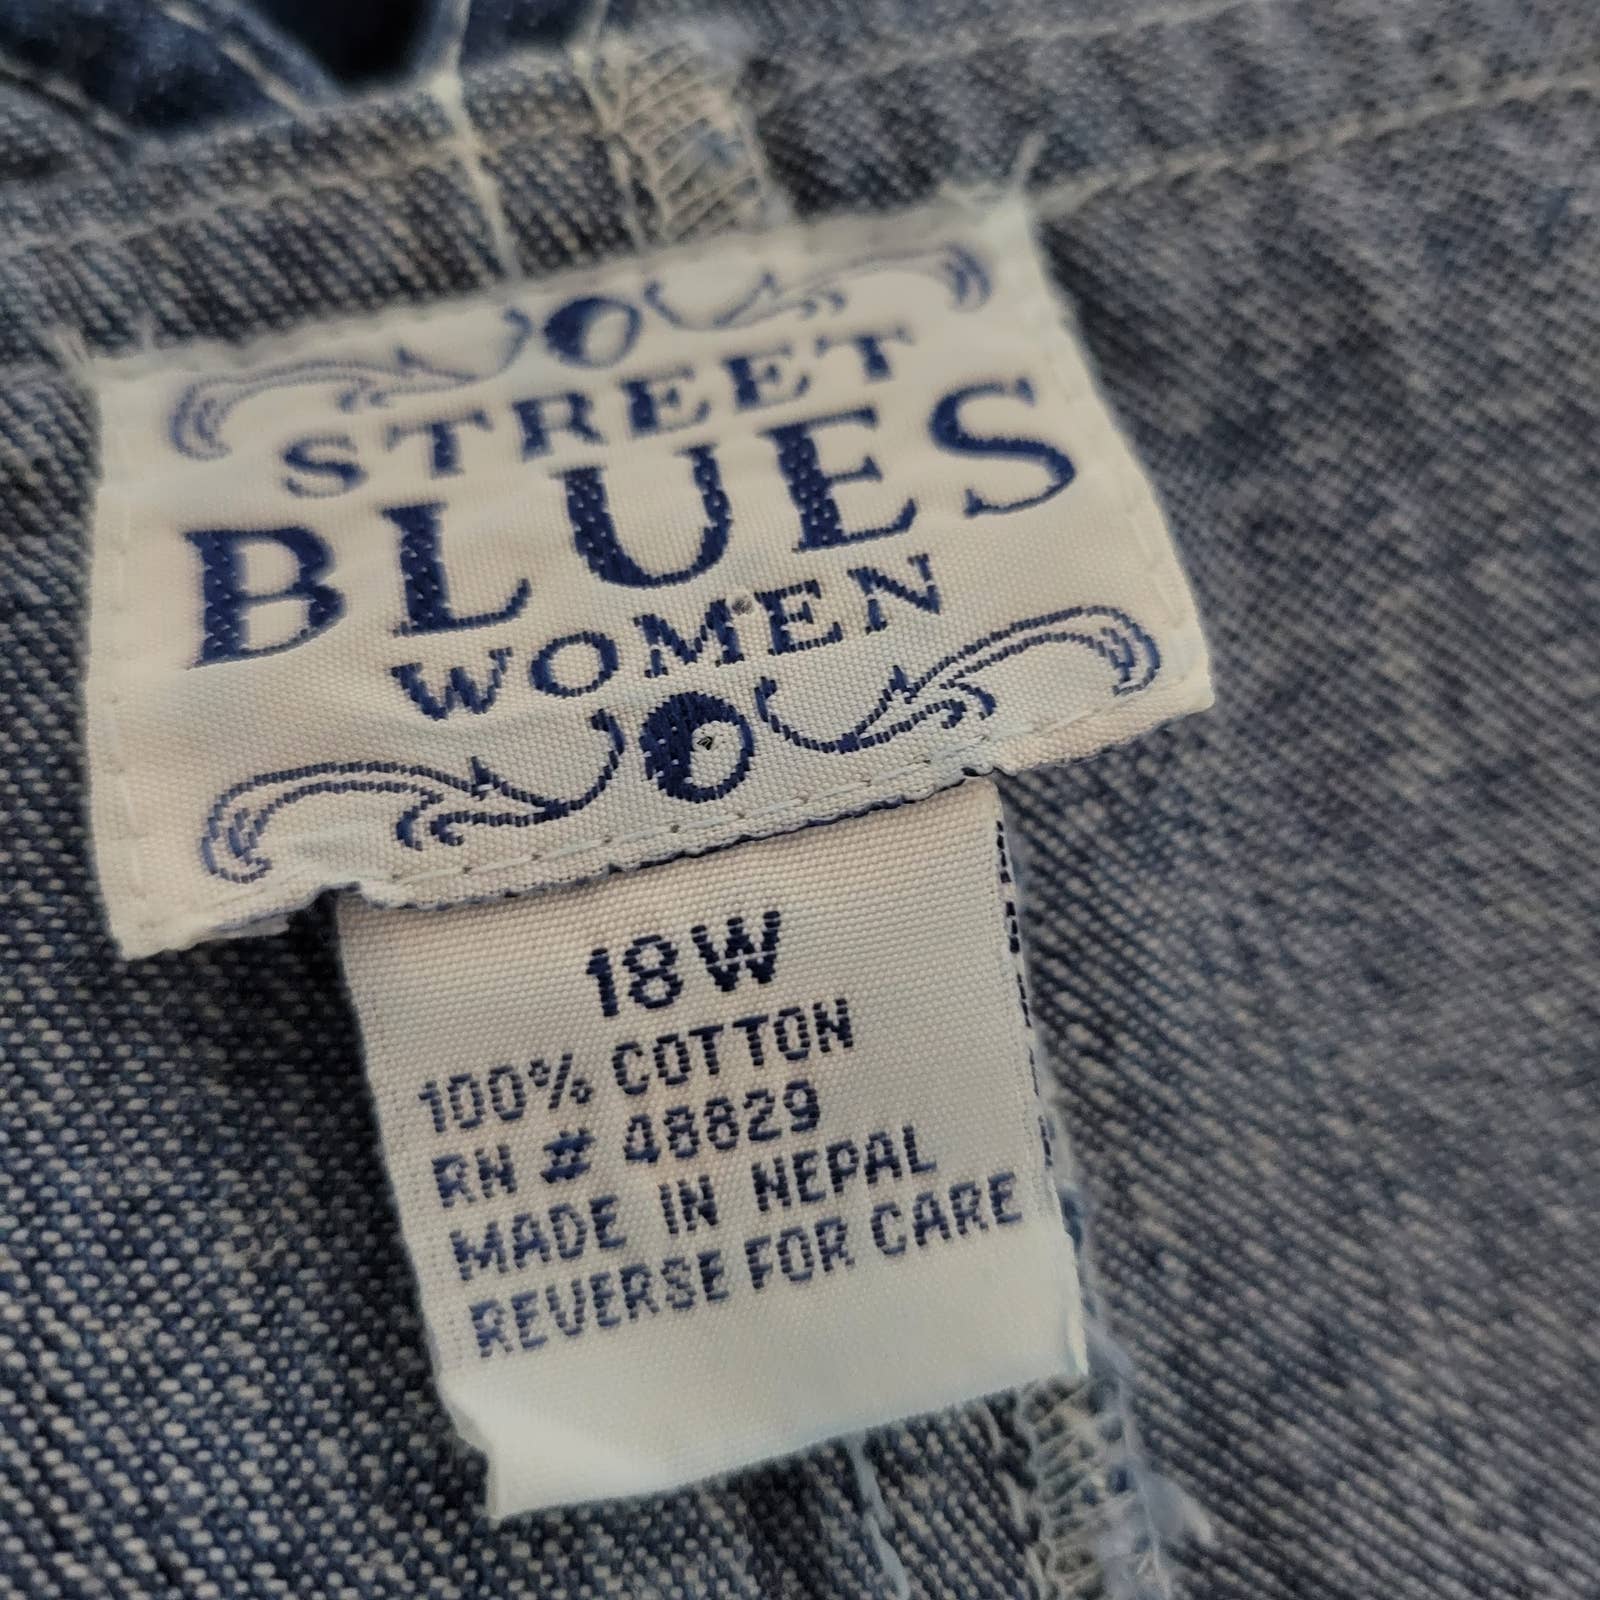 Vintage Bib Overalls Shorts Shortalls Blue Medium Wash Carpenter Plus Size 18W